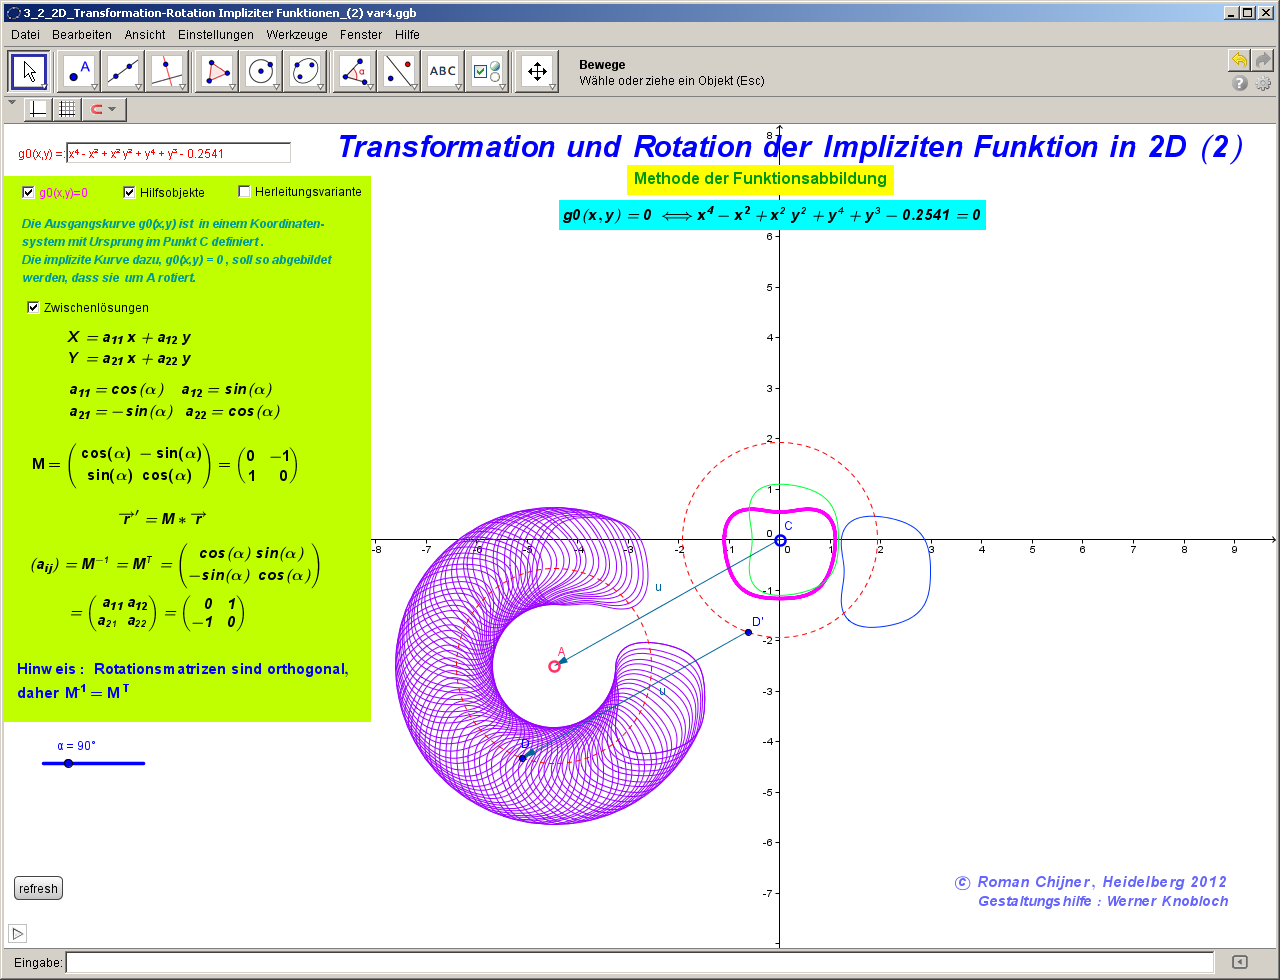 3_2_2D_Transformation_Rotation_impliziter_Funktionen_2